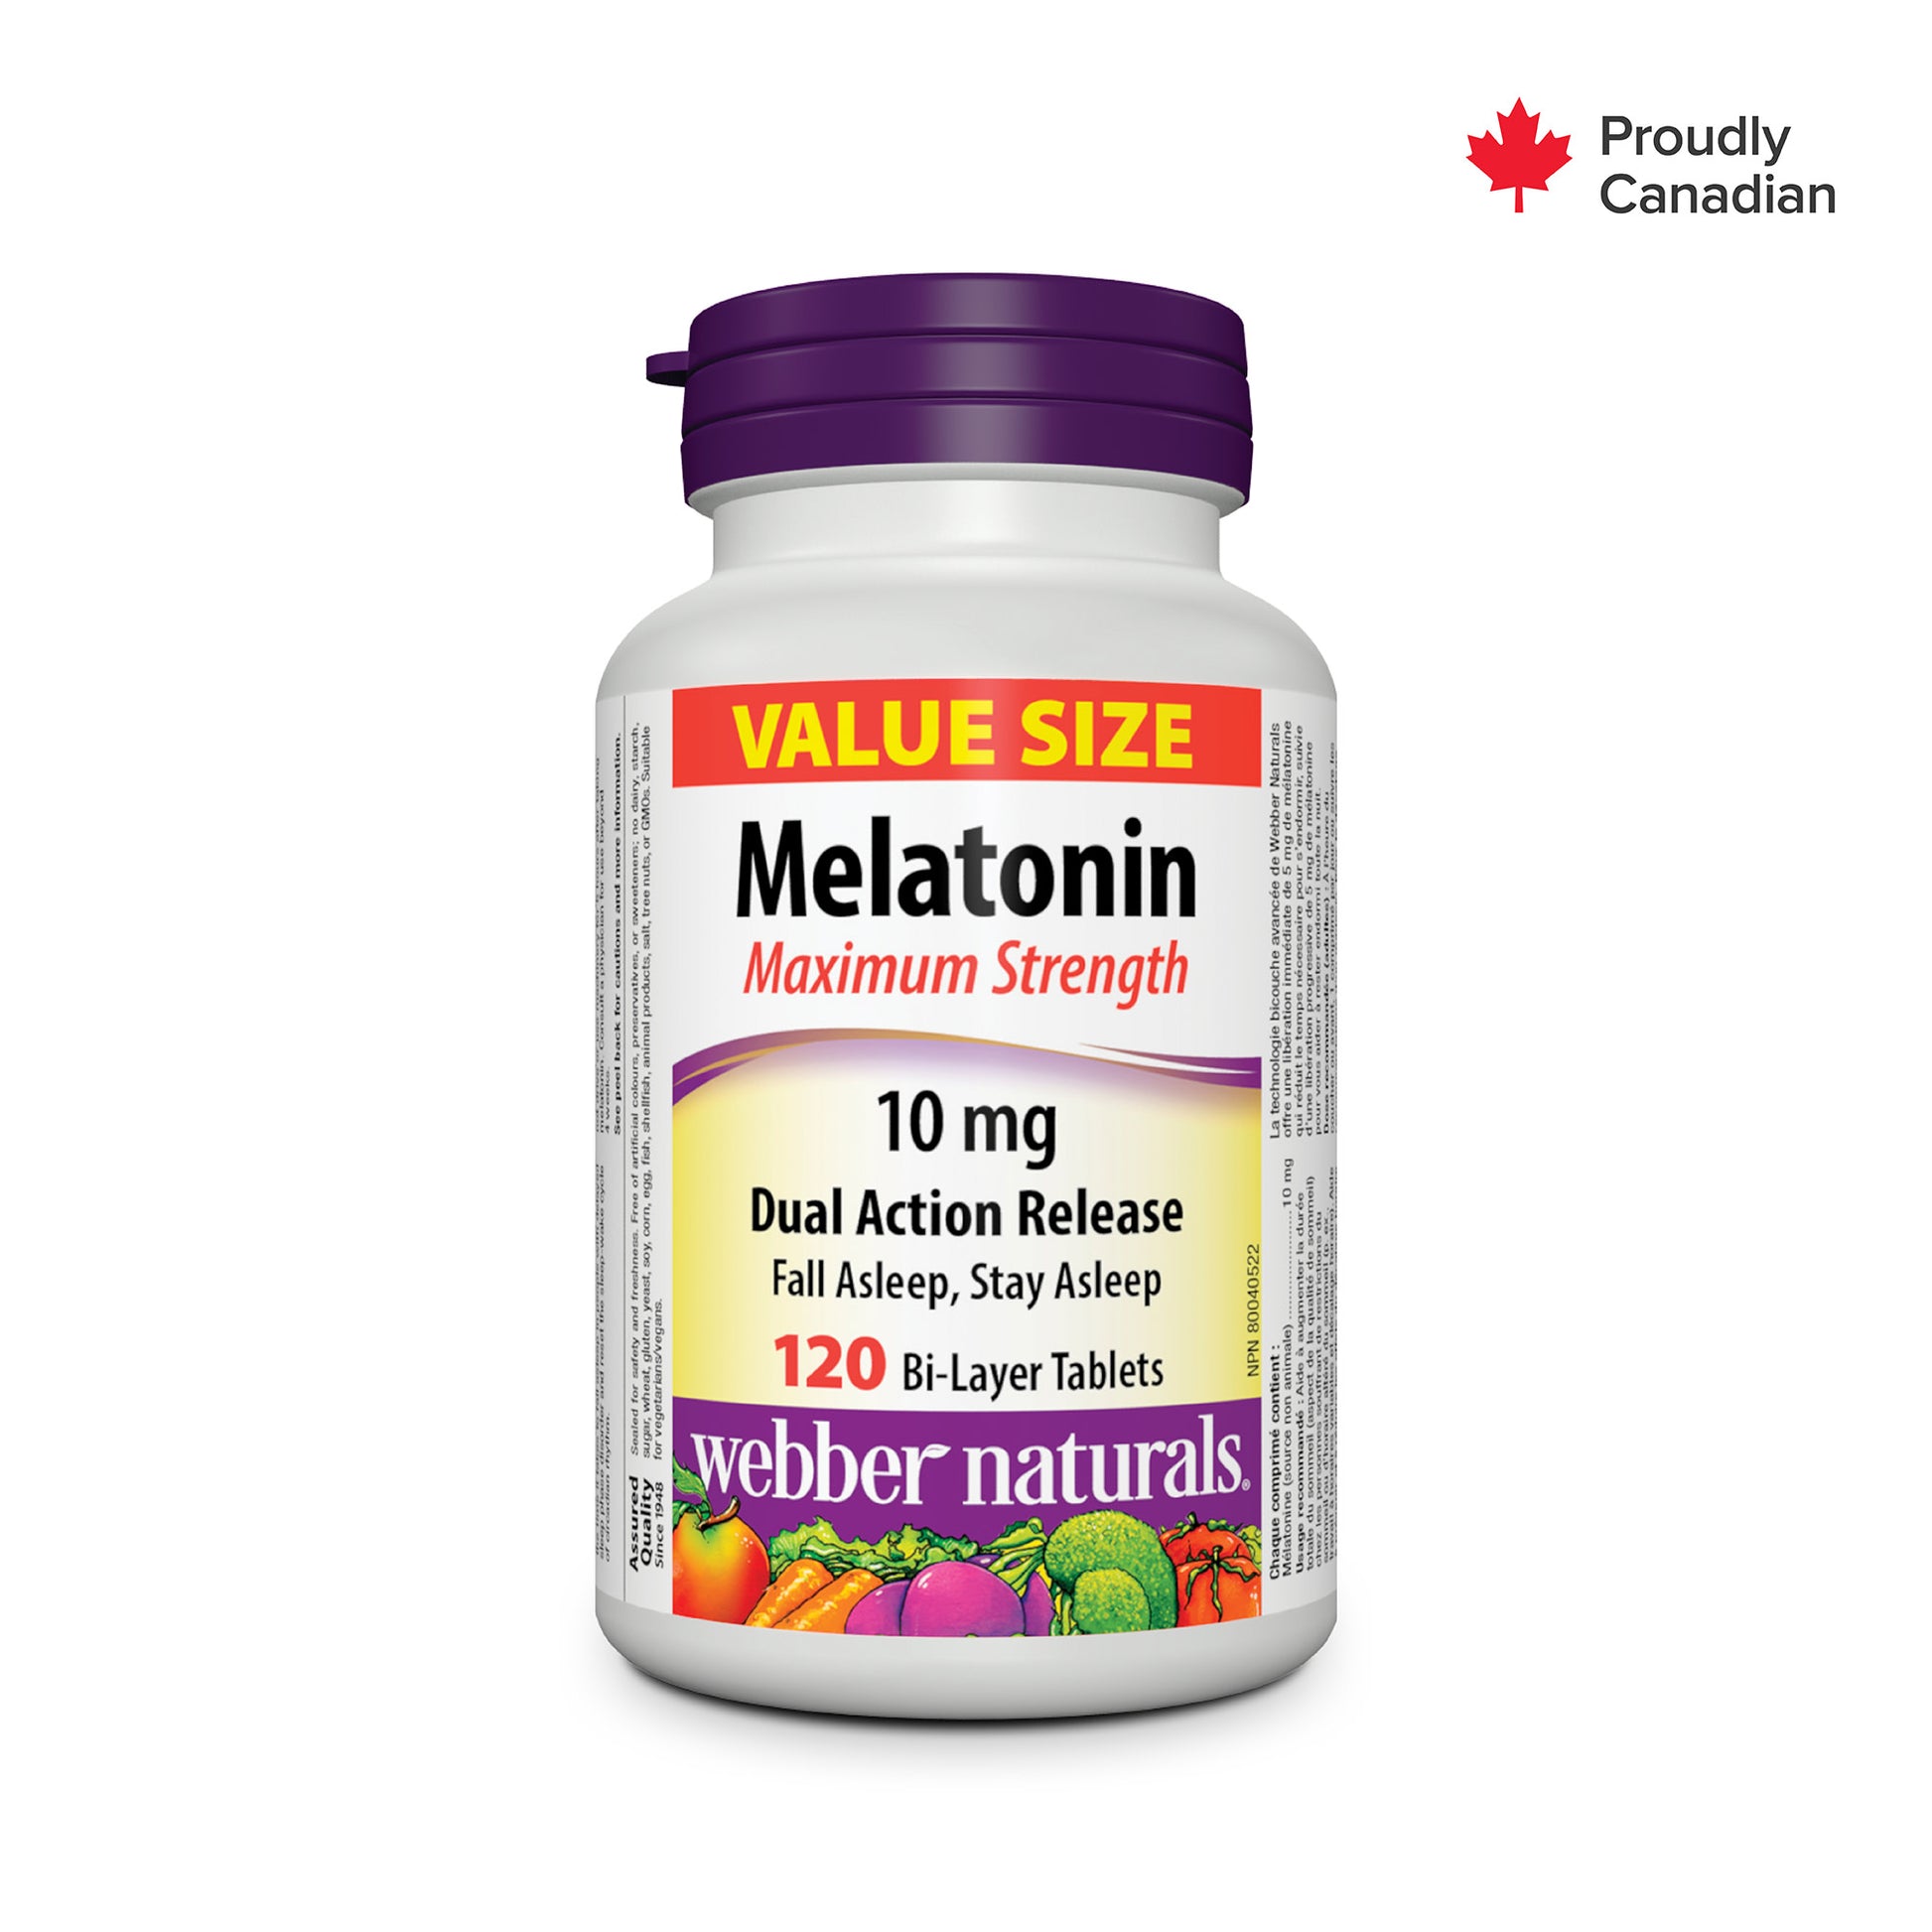 Melatonin Maximum Strength Dual Action Release 10 mg for Webber Naturals|v|hi-res|WN3918